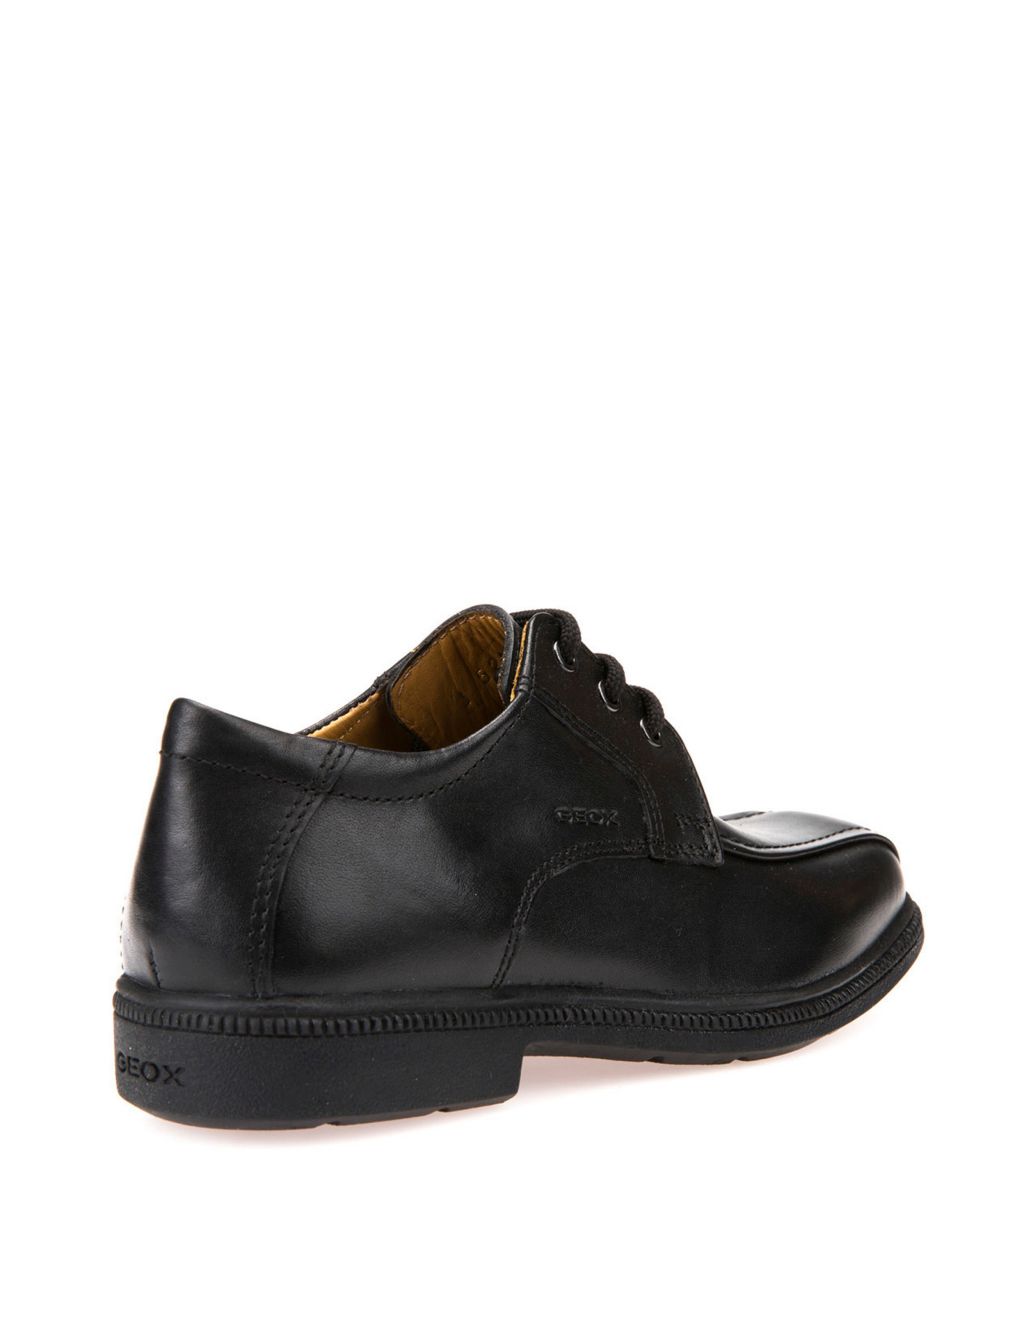 Leather School Shoes (2½ Large-8 Large) image 4